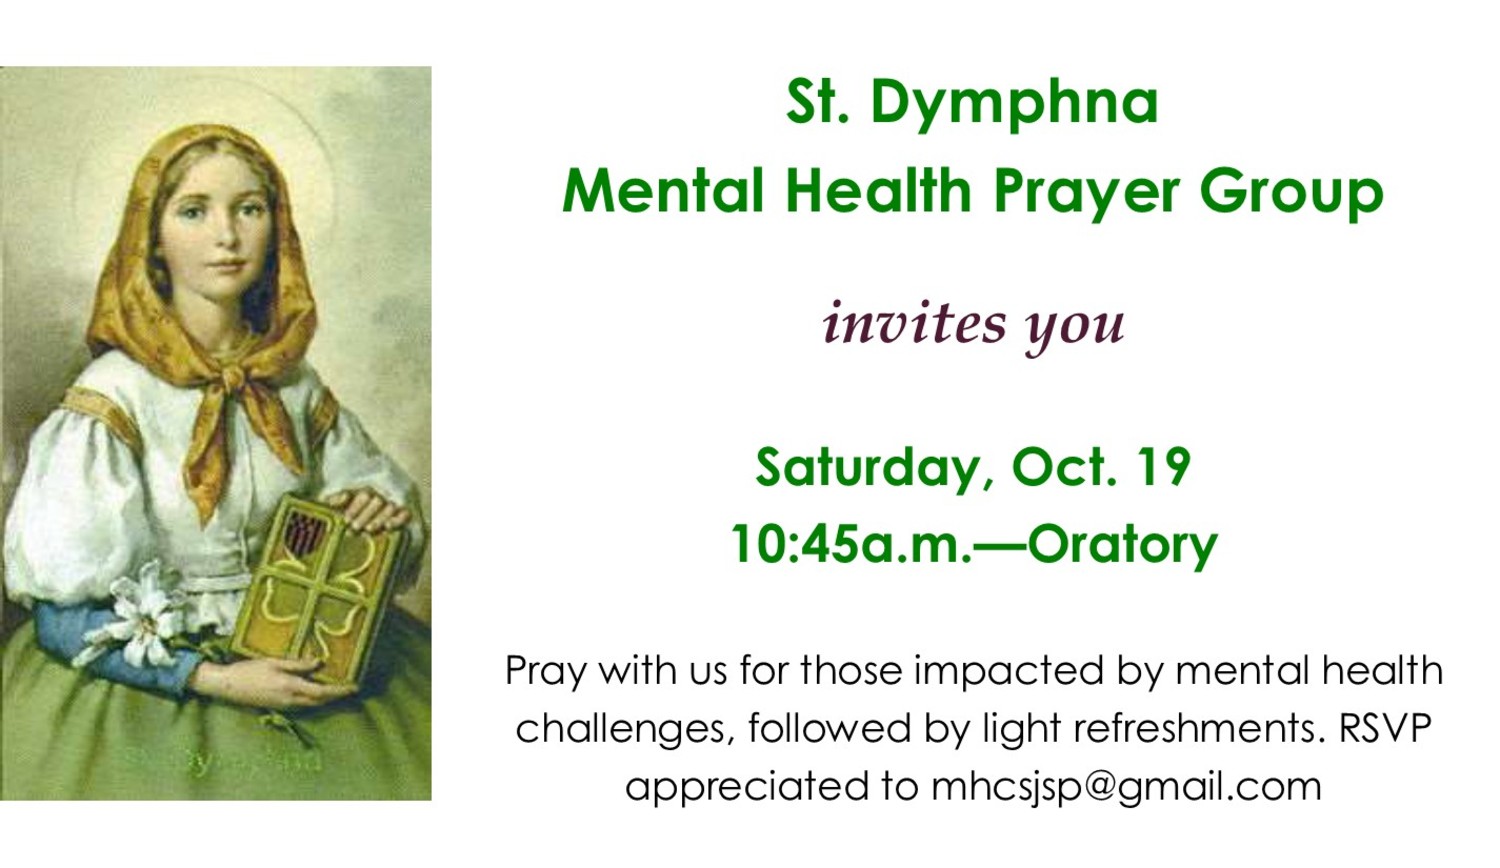 St. Dymphna Mental Health Prayer Group